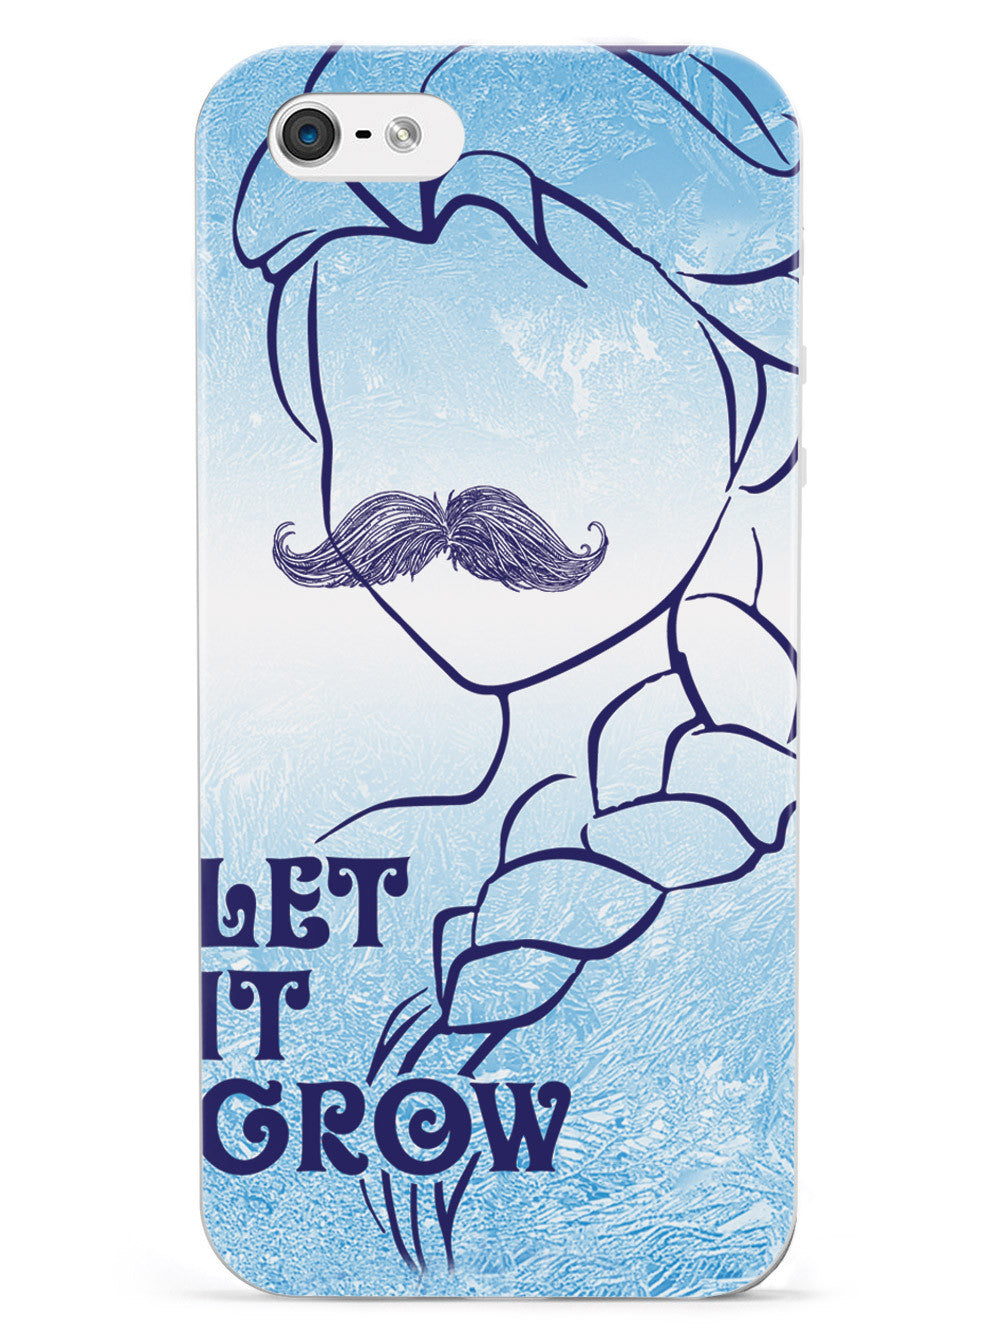 Let it Grow - Mustache Movember Case